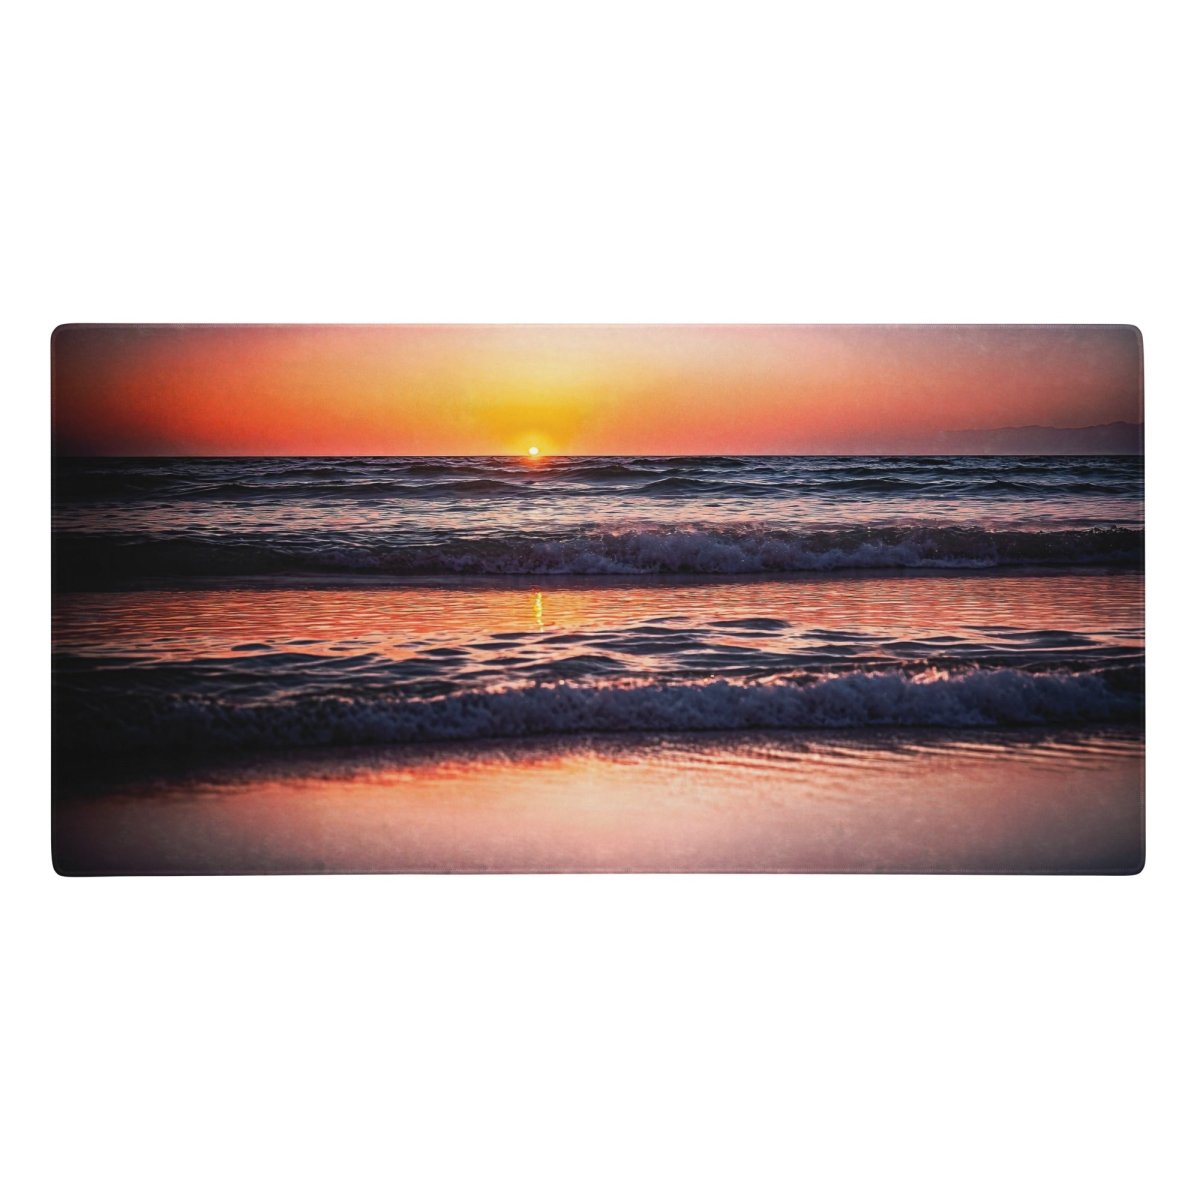 Coastal dusk - Gaming mouse pad - Ever colorful